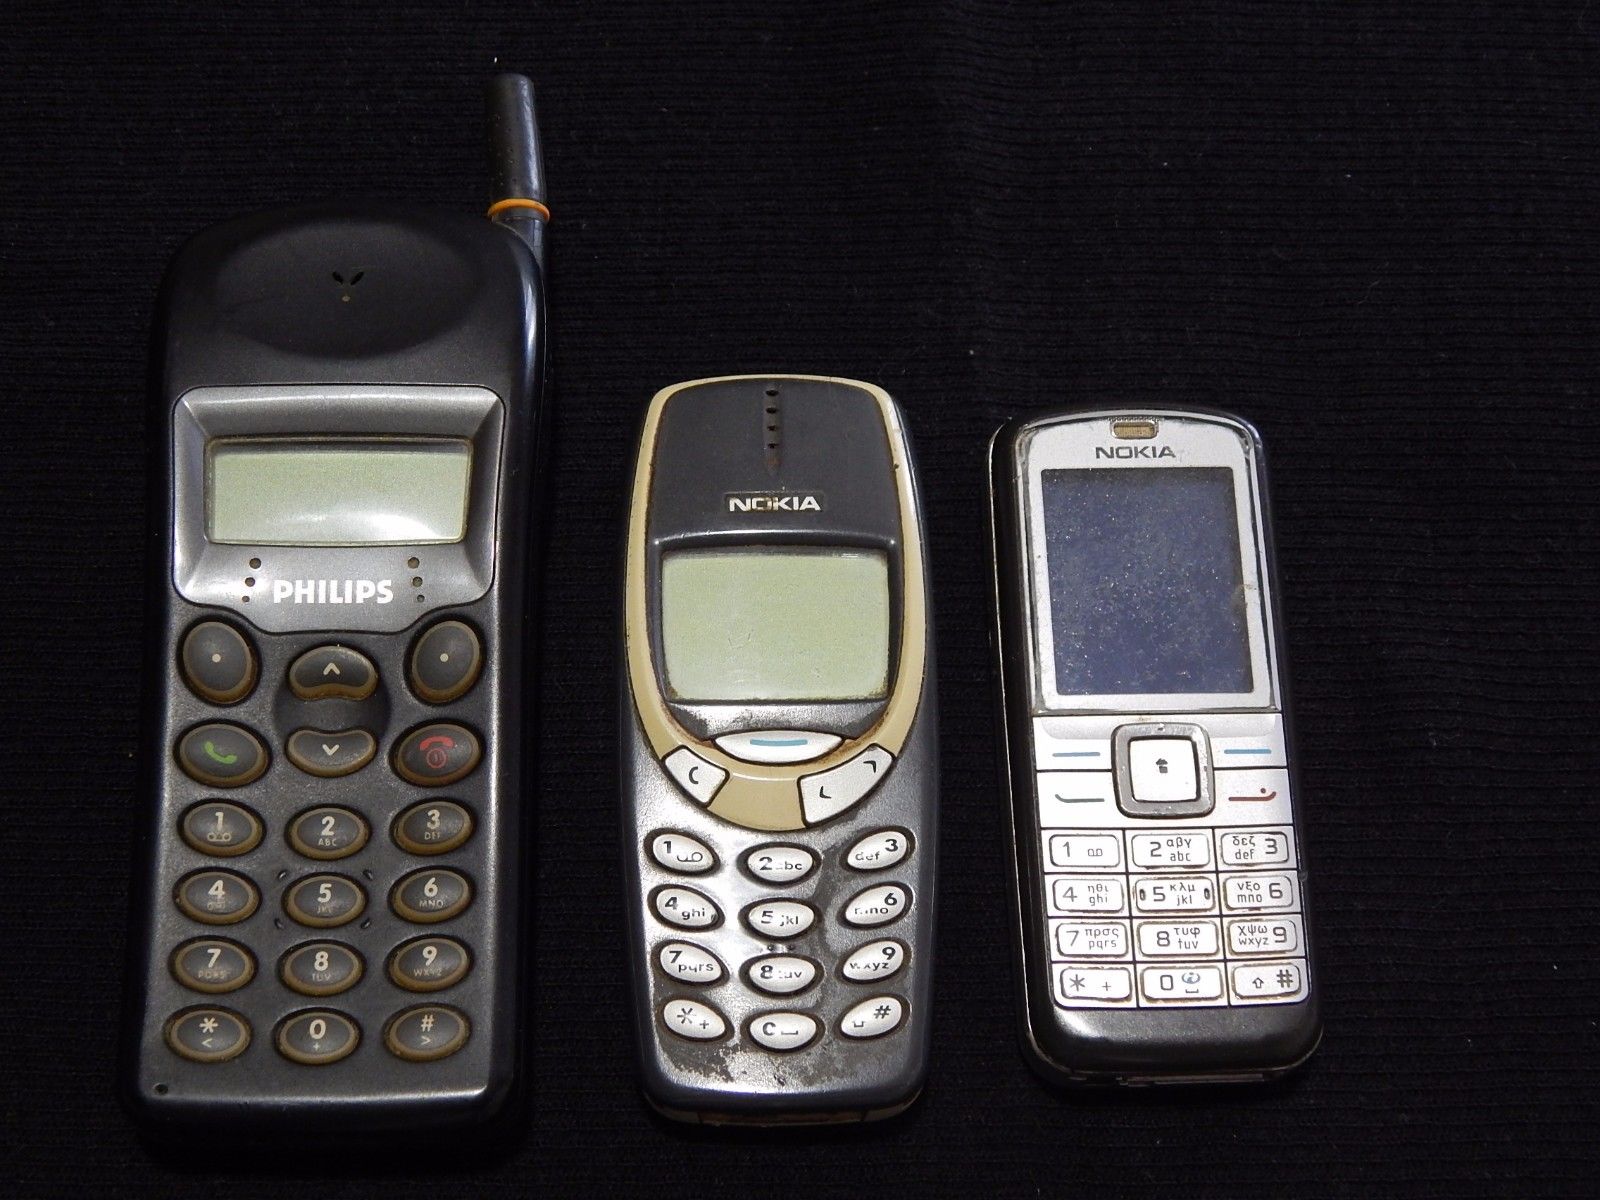 3 MOBILE PHONES LOT - PHILIPS DCS GSM - NOKIA 3310 - NOKIA 6070 ...